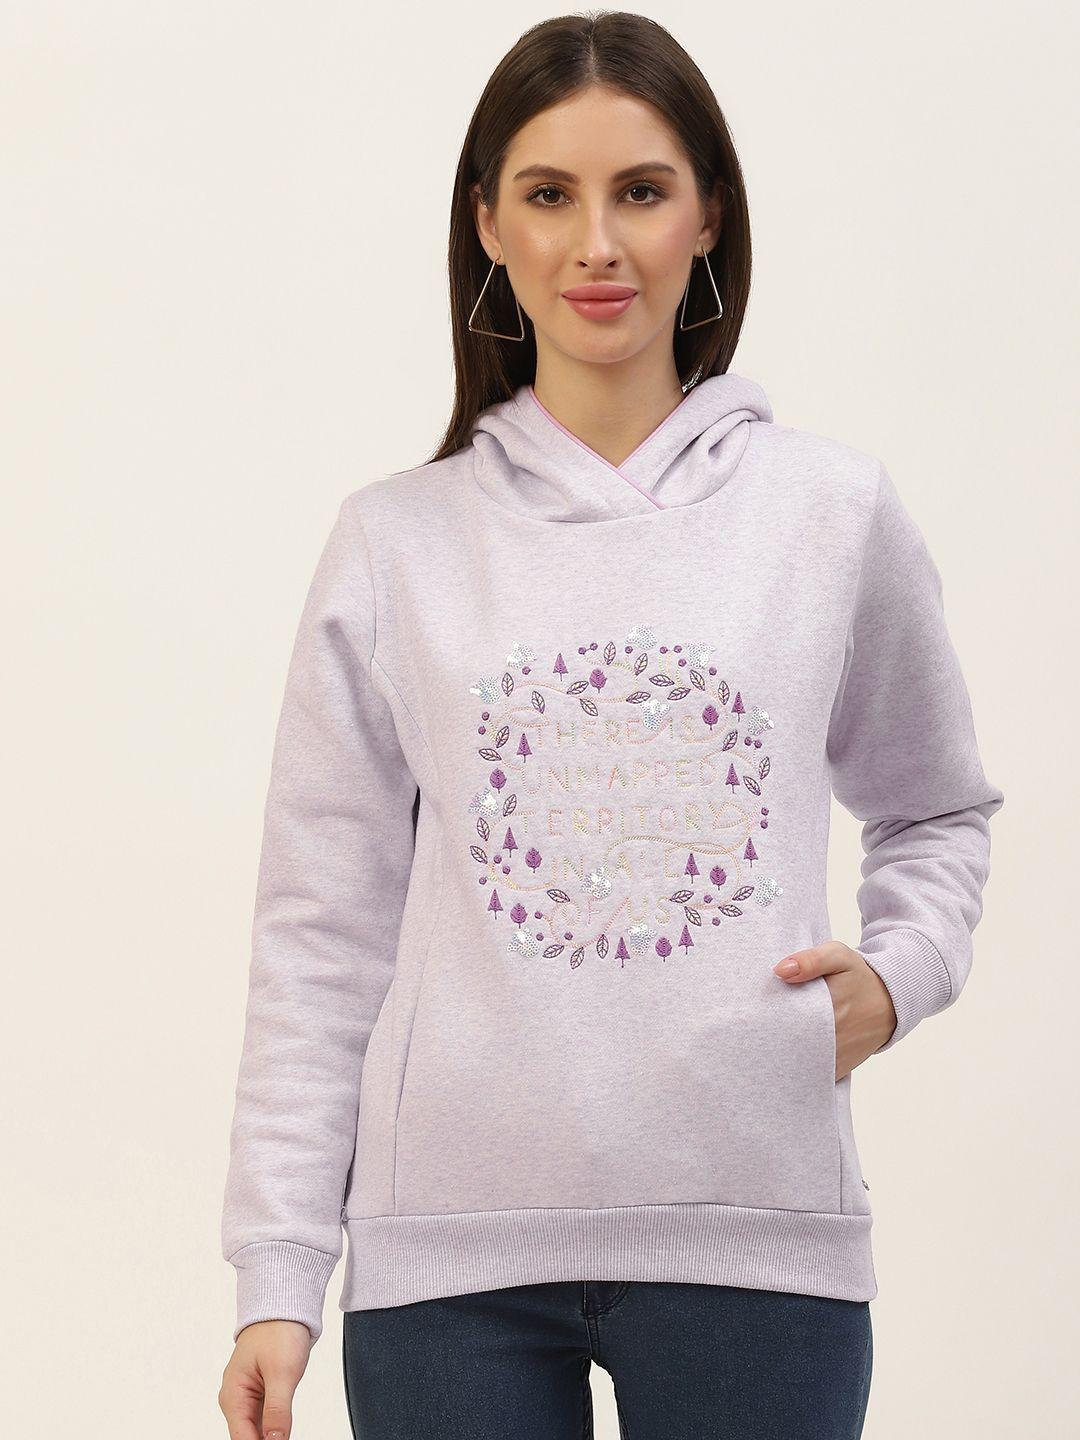 monte carlo women lavender embroidered hooded sweatshirt